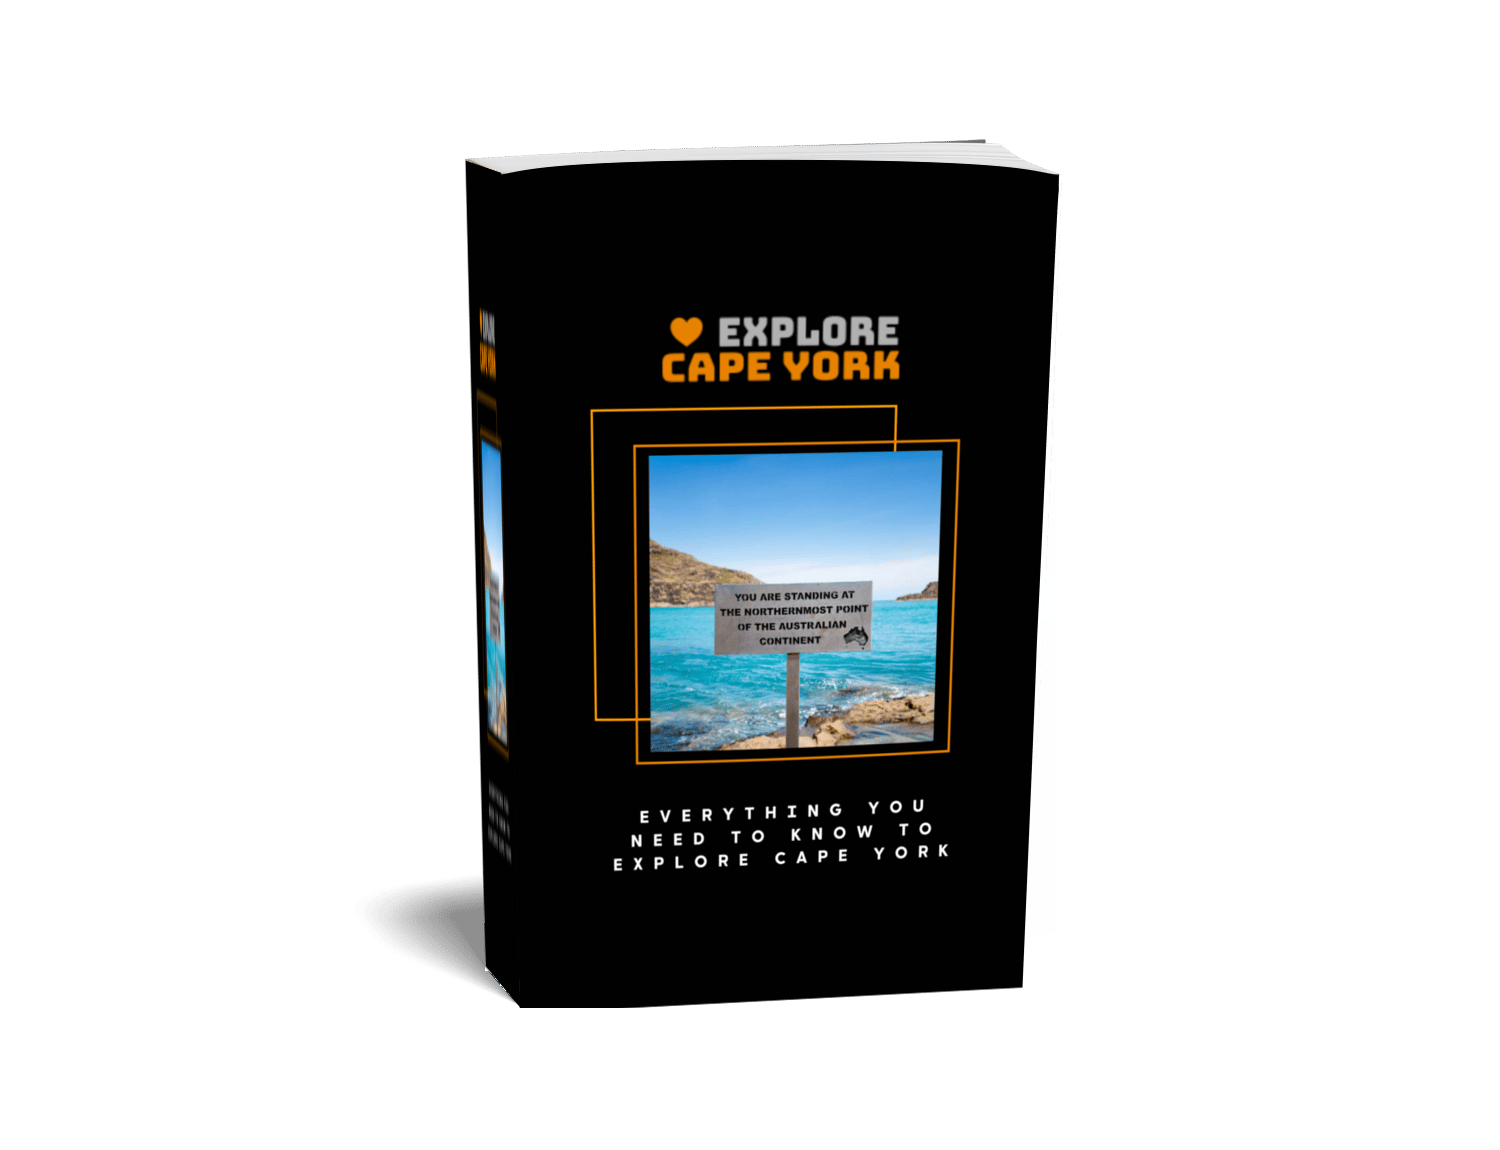 cape york travel guide book